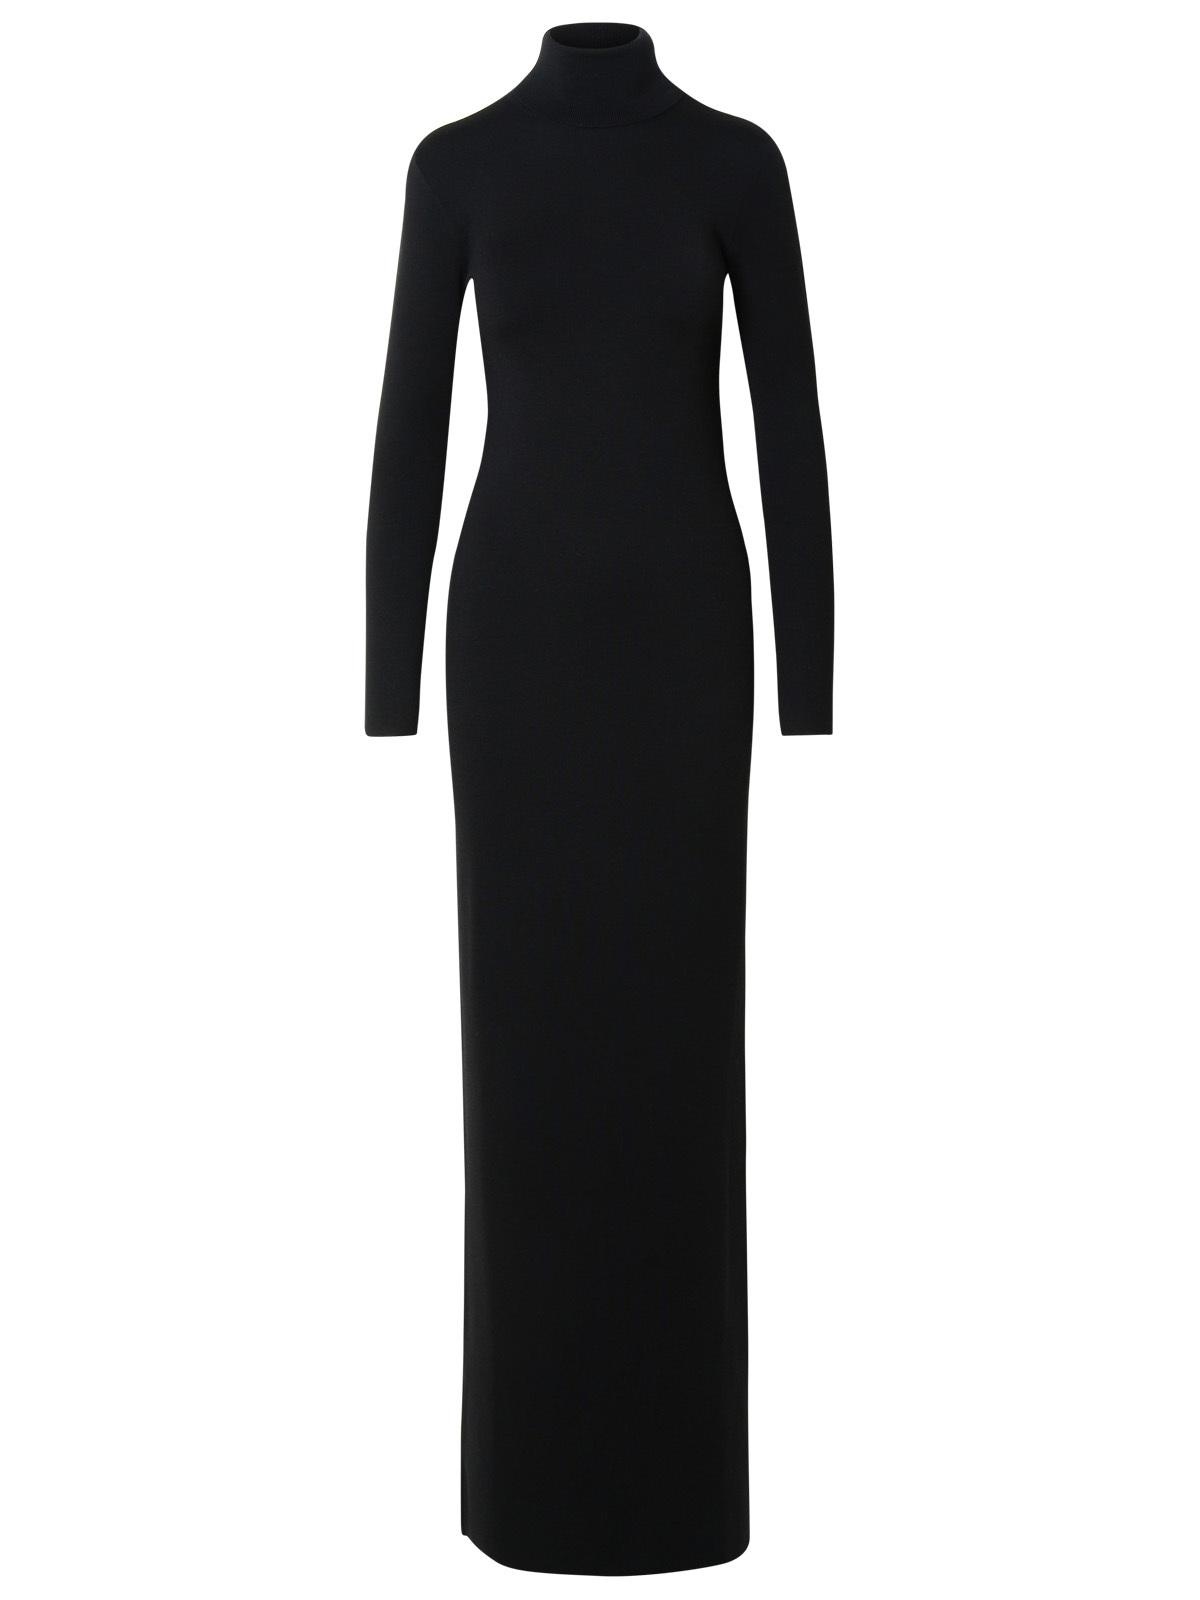 Saint Laurent Black Virgin Wool Dress - 1